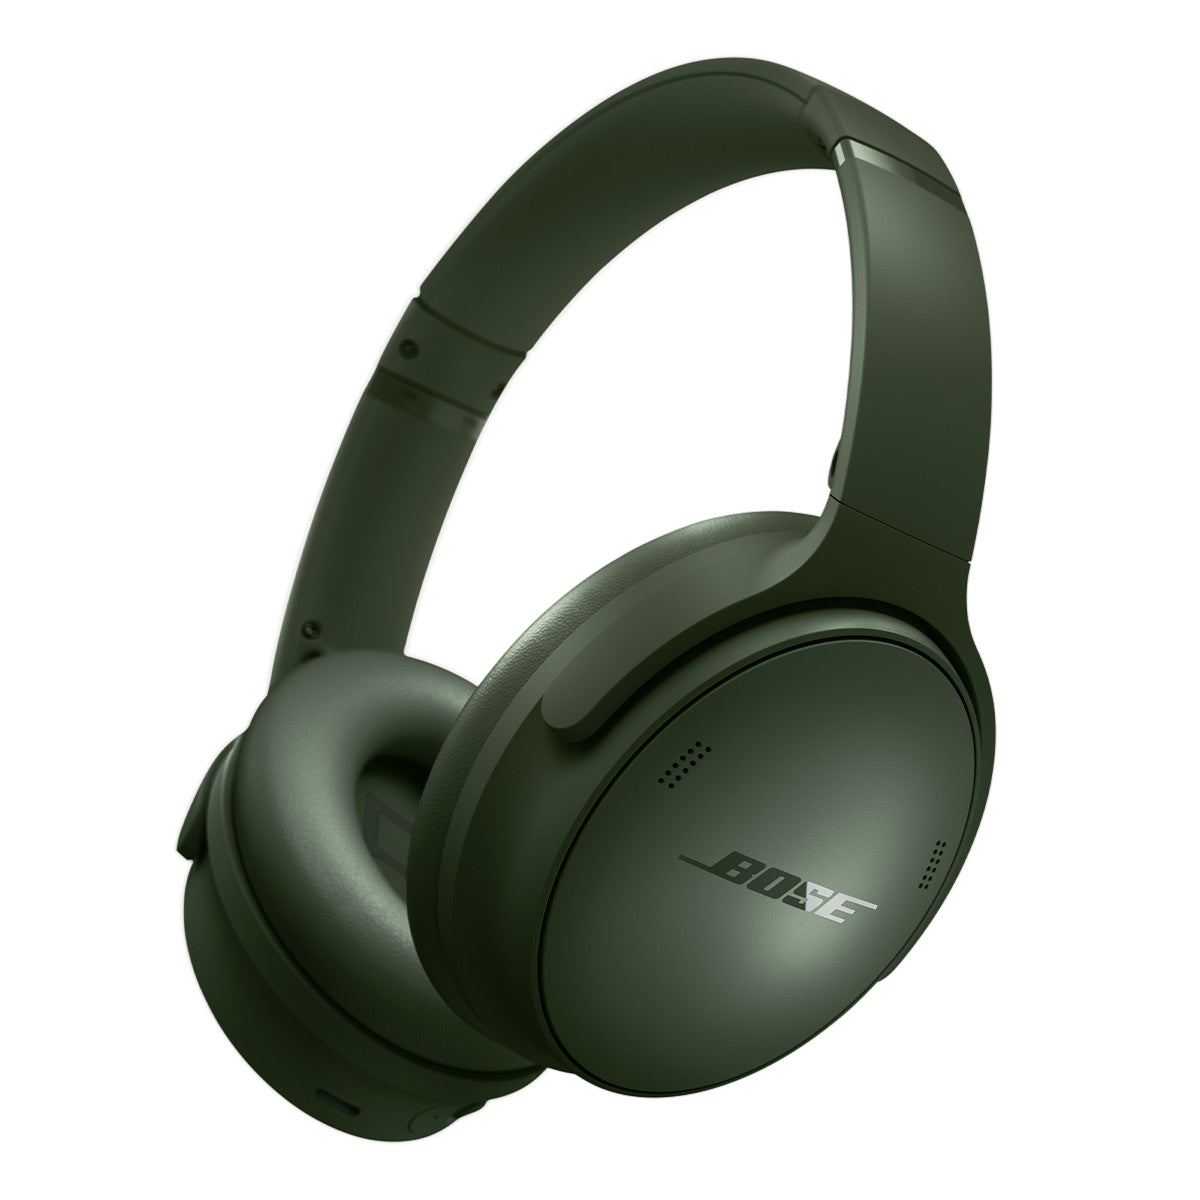 Bose QuietComfort Headphones with Active Noise Cancellation - Pair 